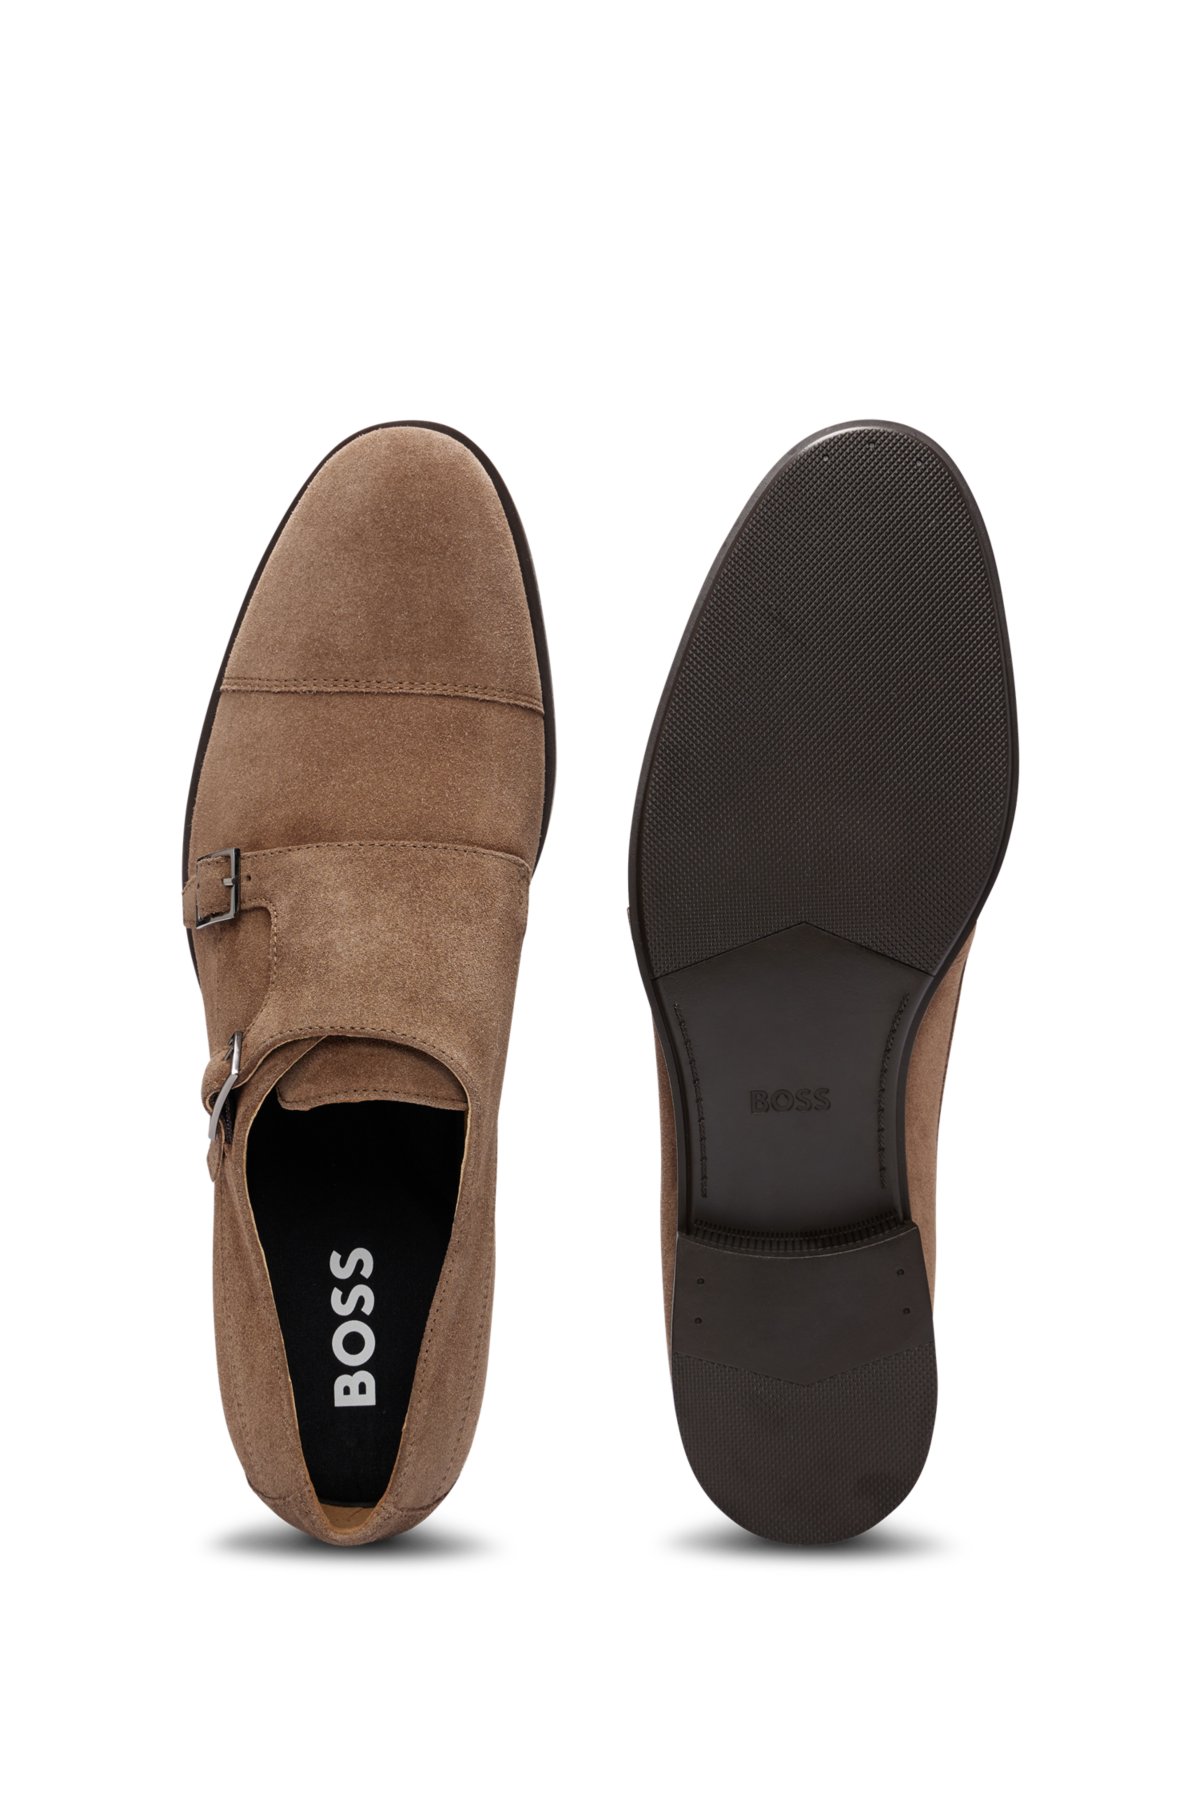 Double-monk shoes in suede, Beige